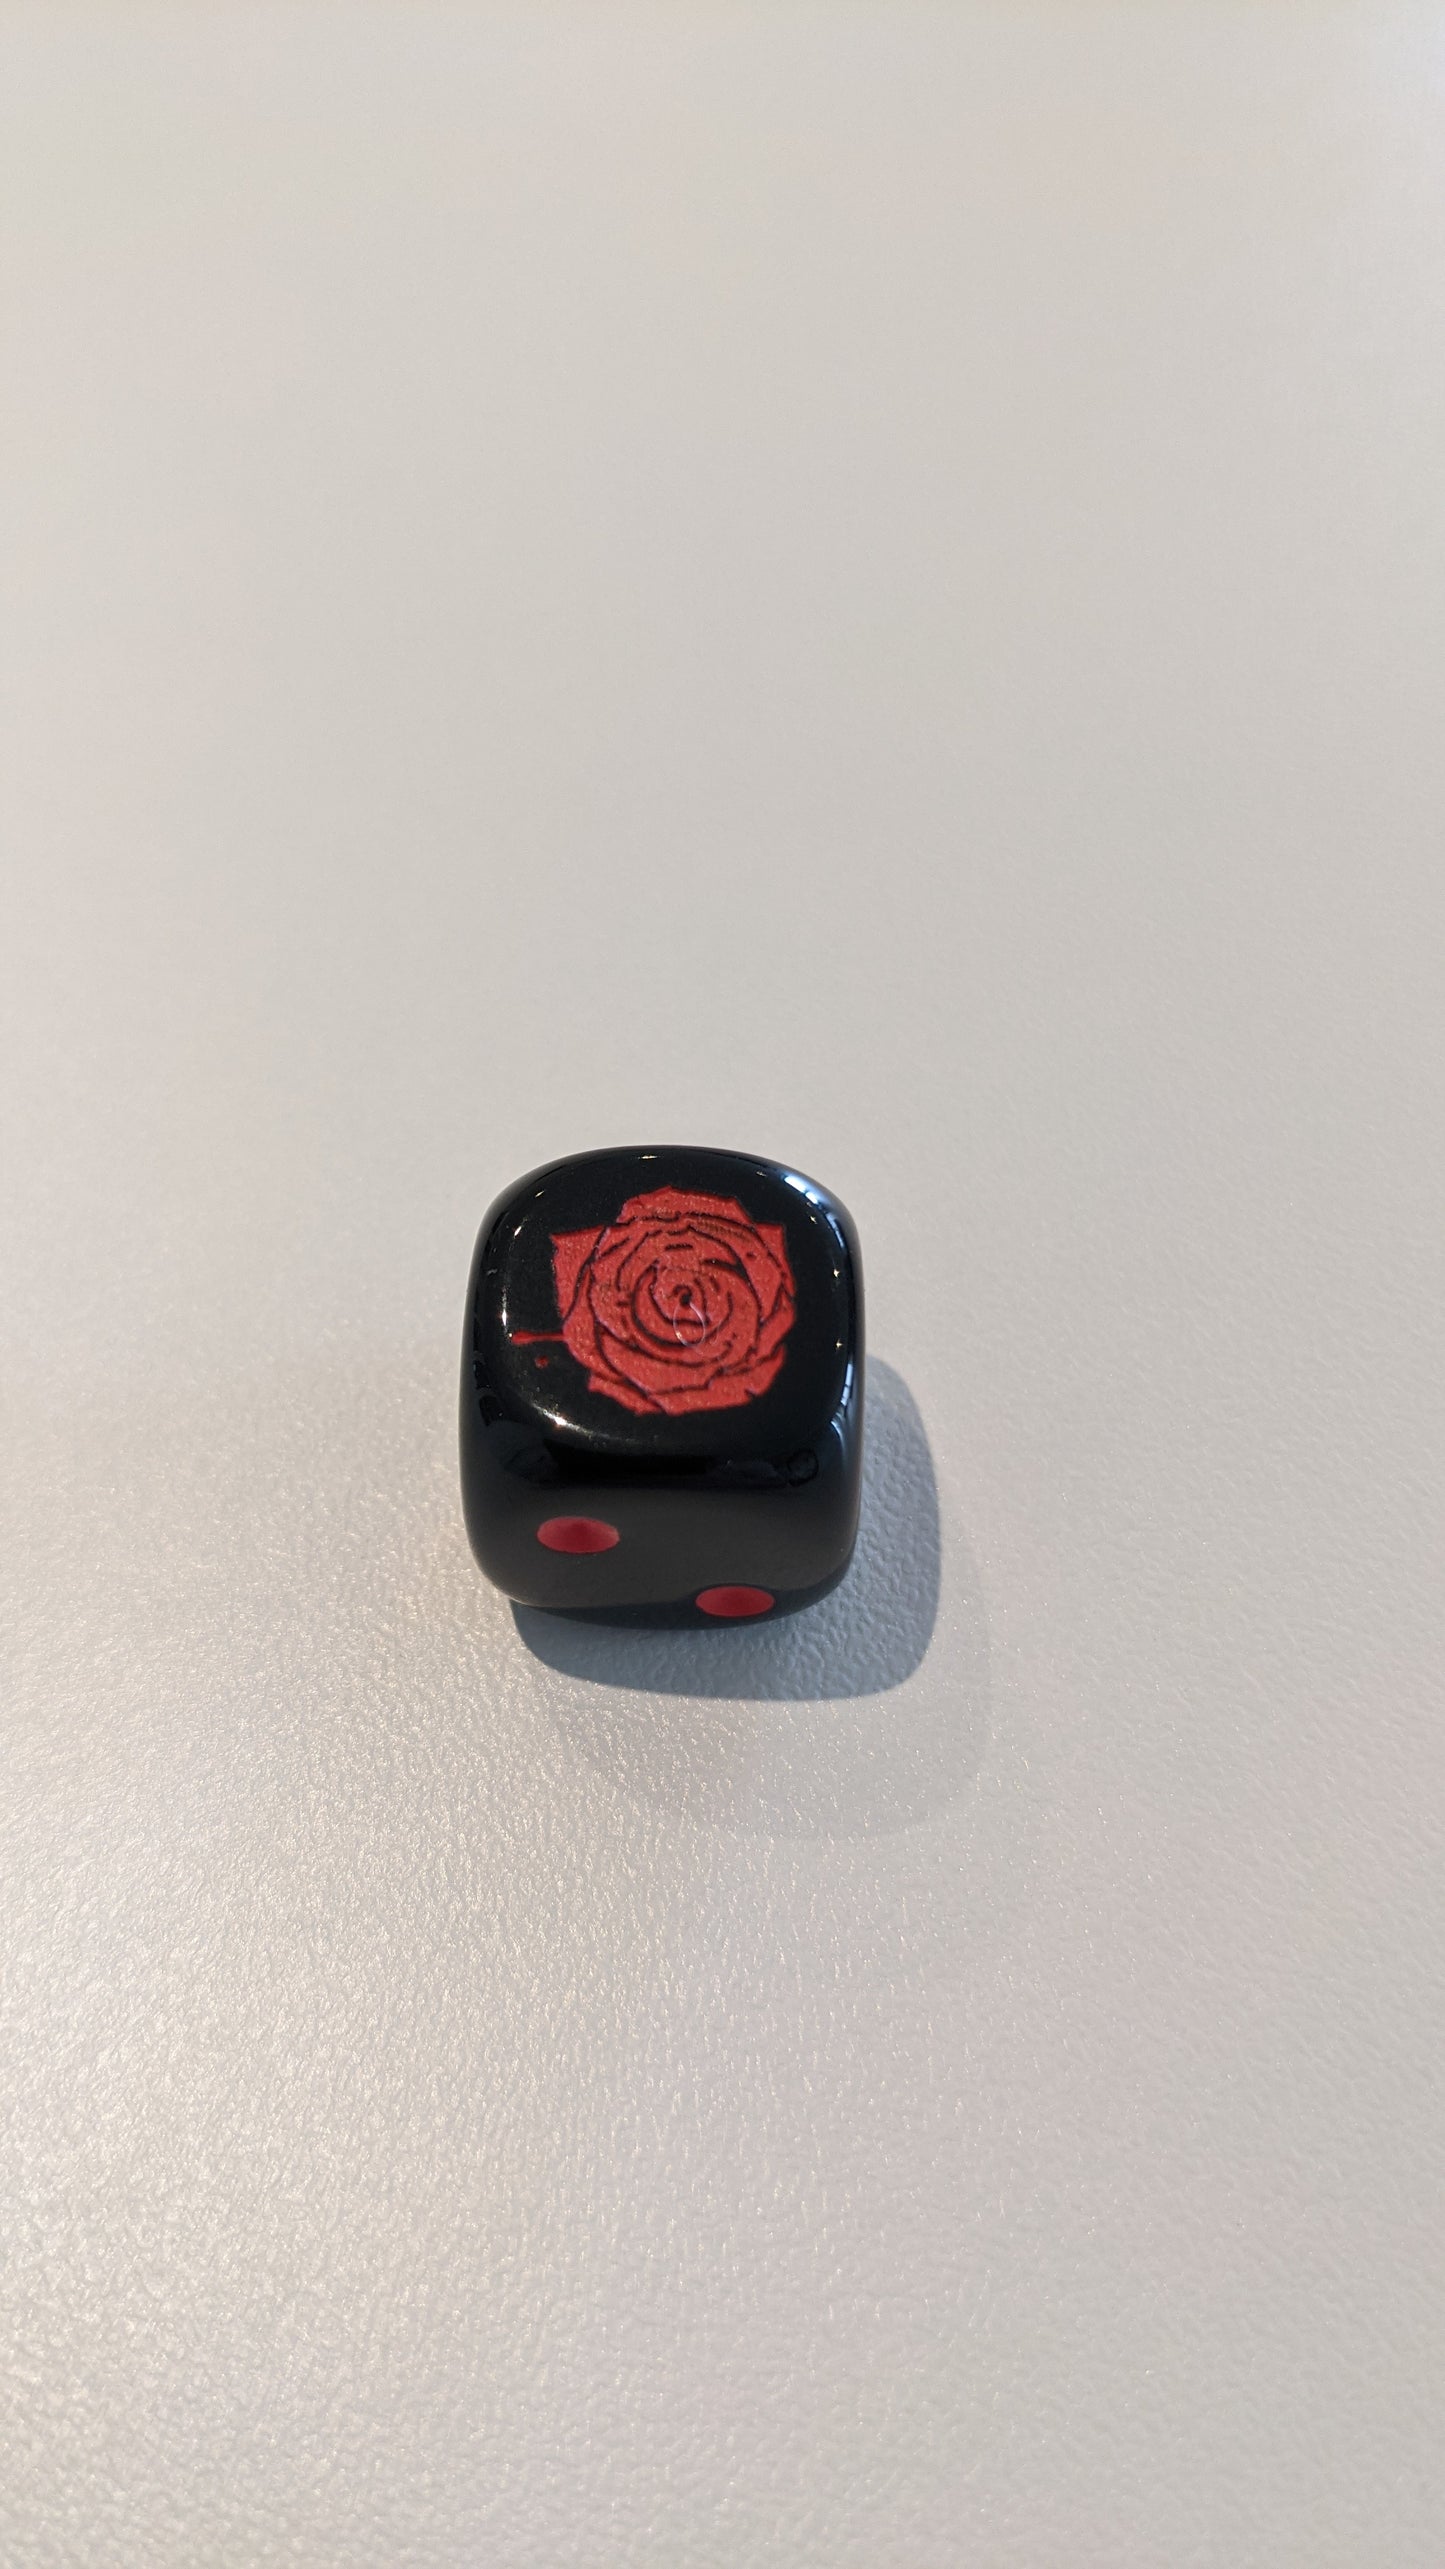 Red Rose Dice Pack